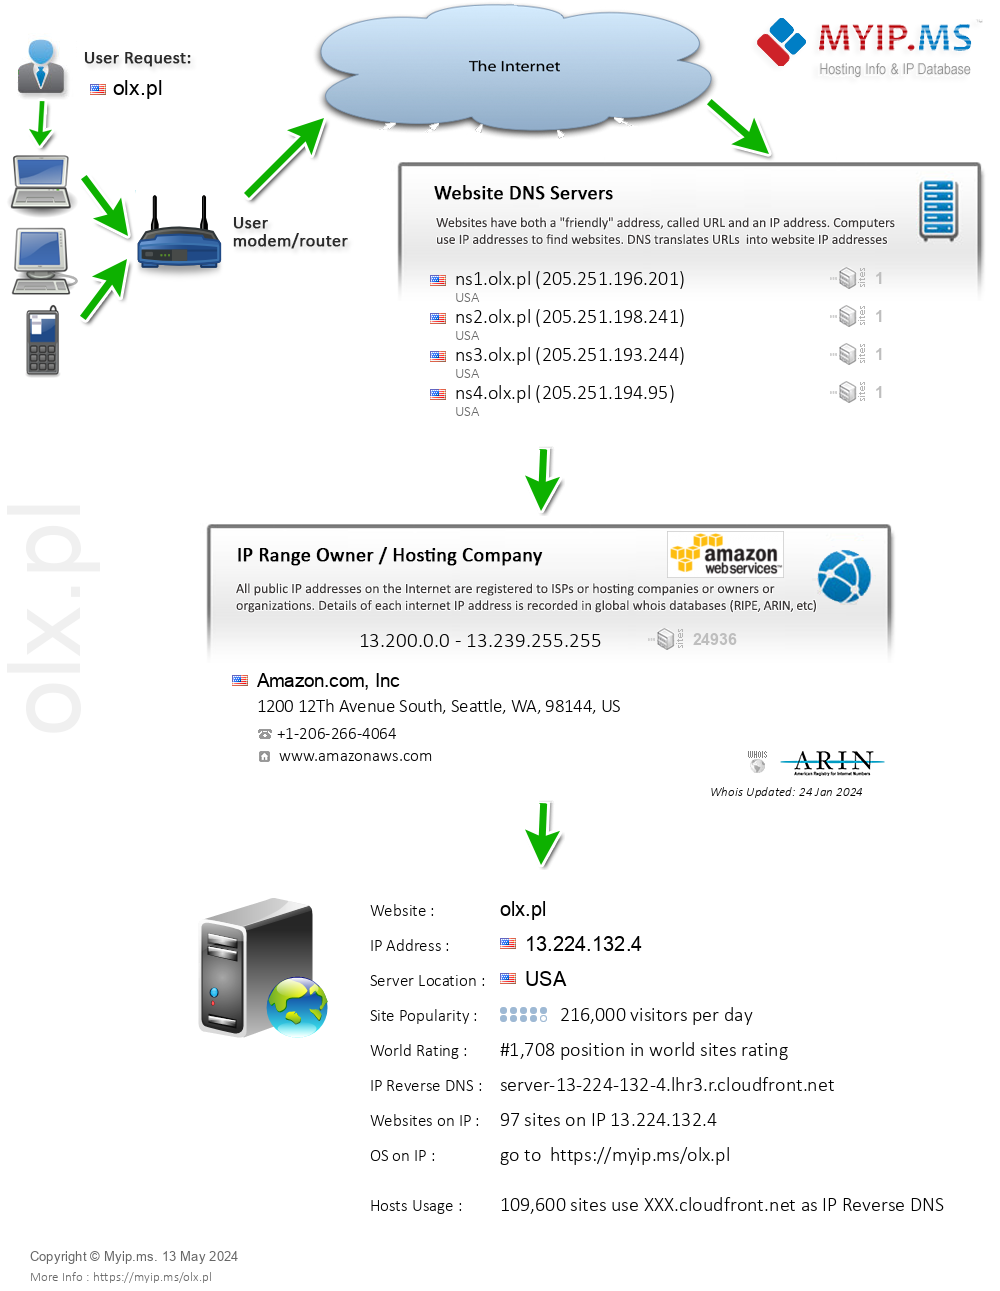 Olx.pl - Website Hosting Visual IP Diagram